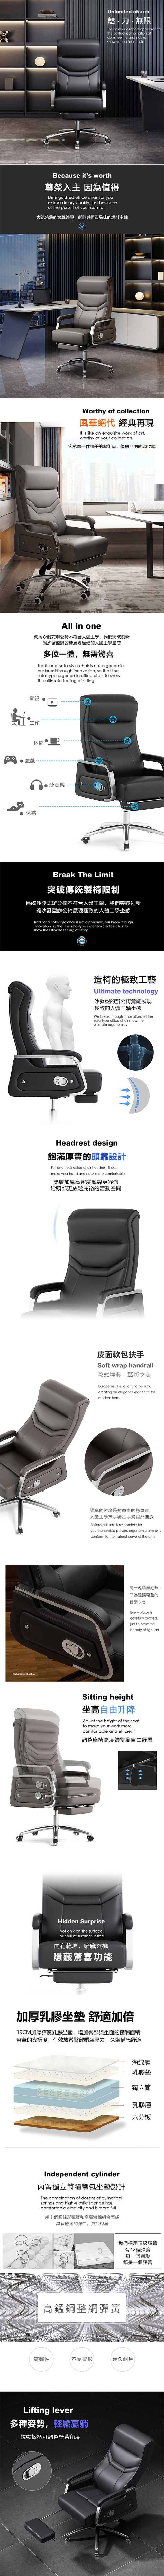 DEPE-德邁國際-CHE300-坐躺-兩用-電腦椅-電競椅-辦公椅-尊貴黑-內1.jpg